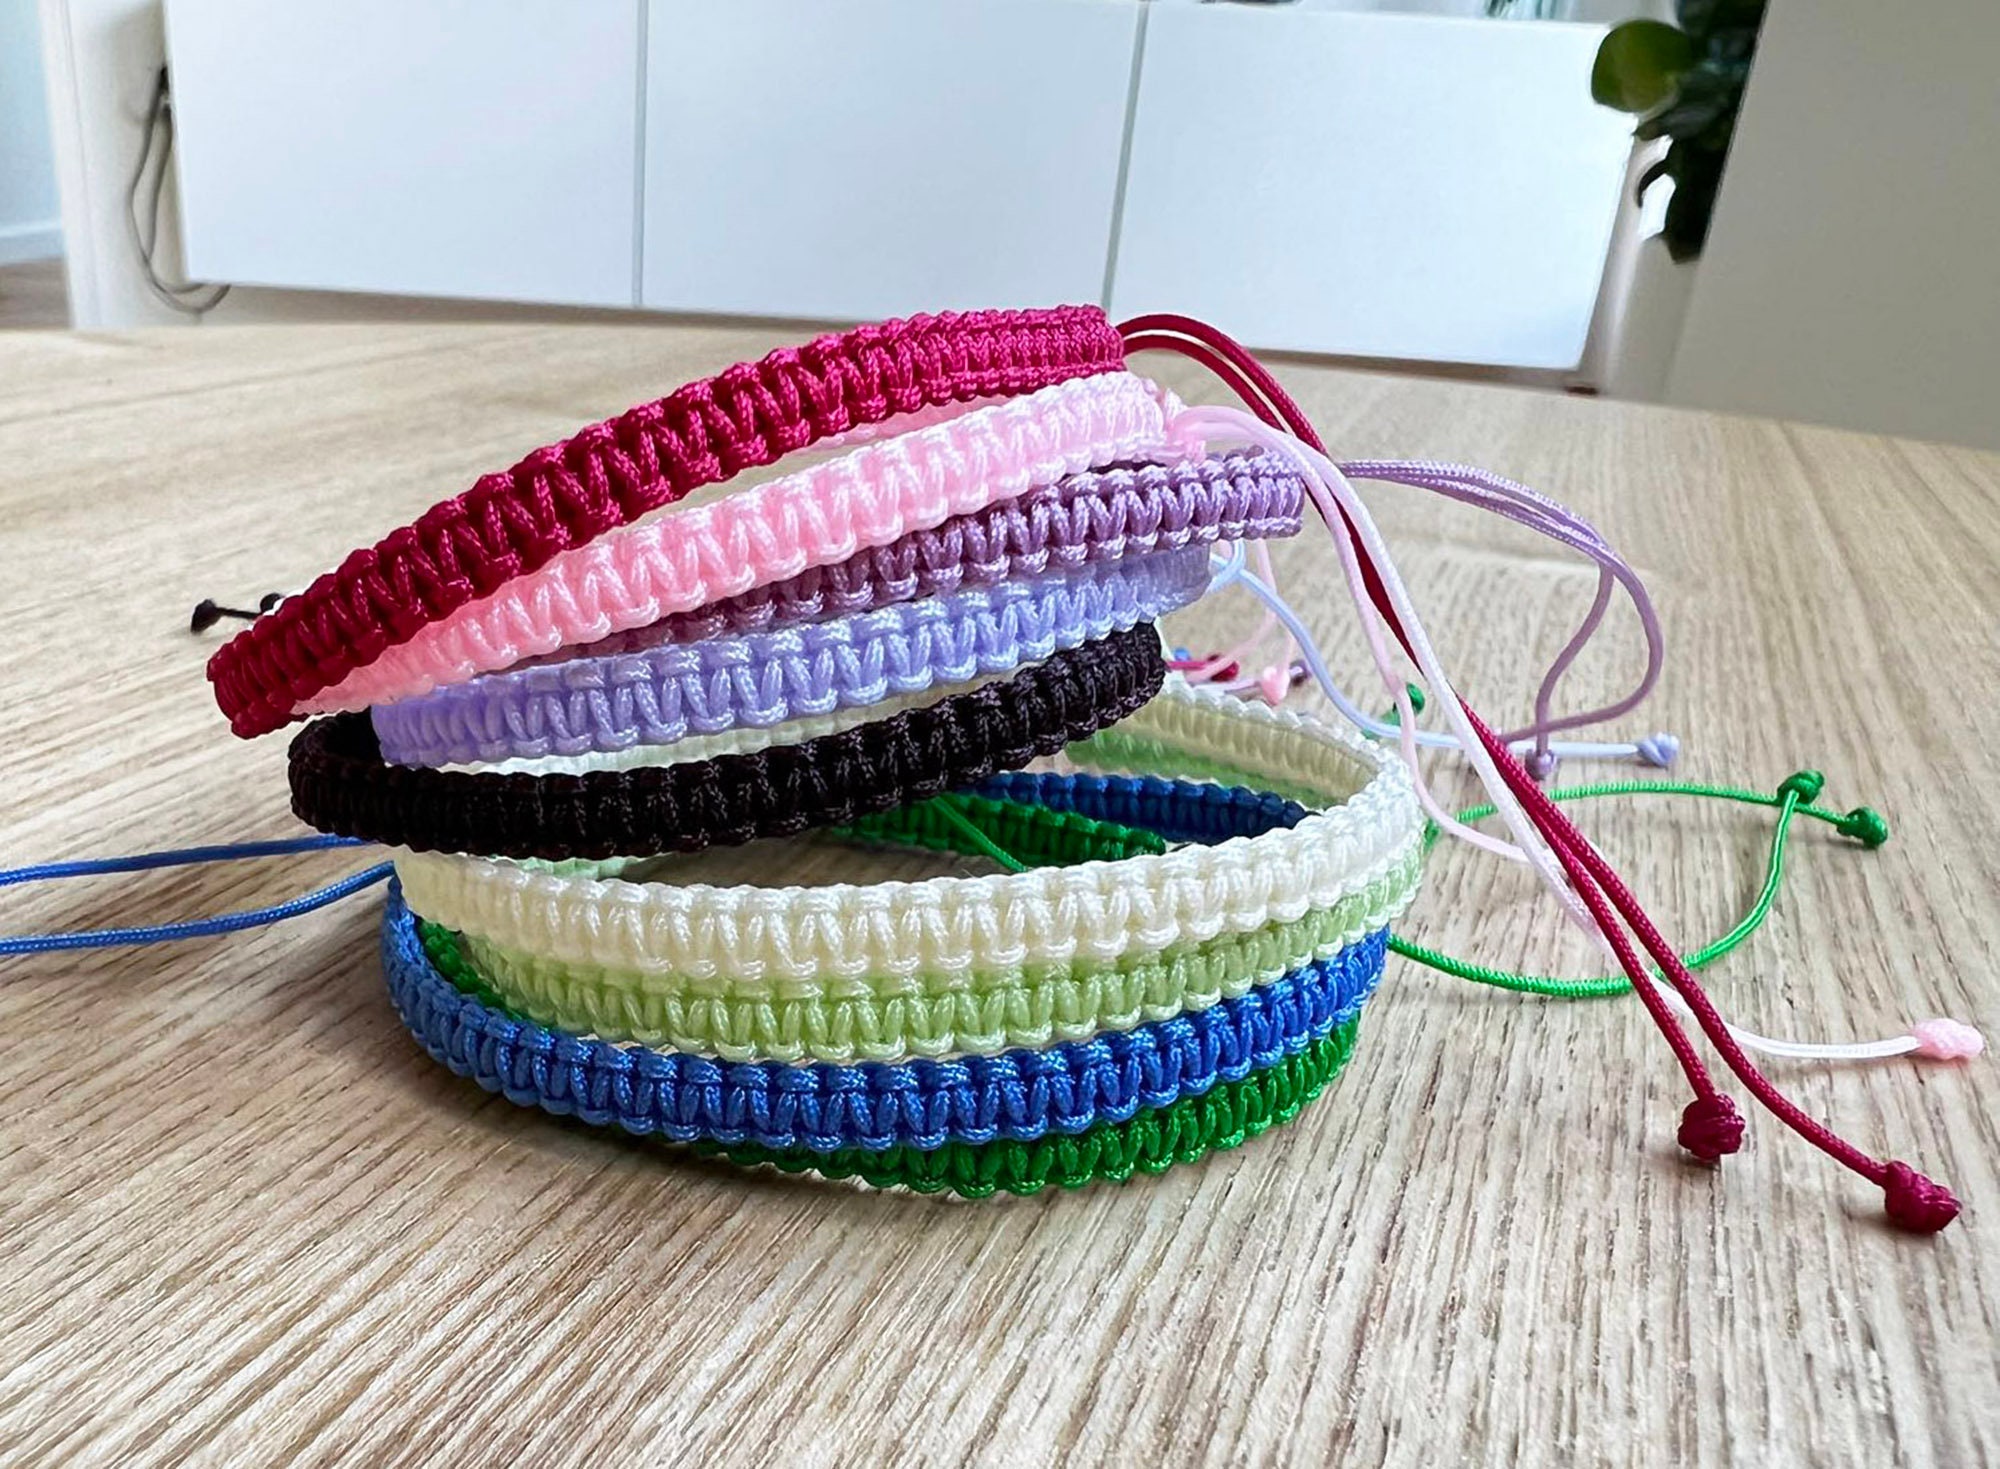  Make It Real - Macrame Friendship Bracelet Making Kit